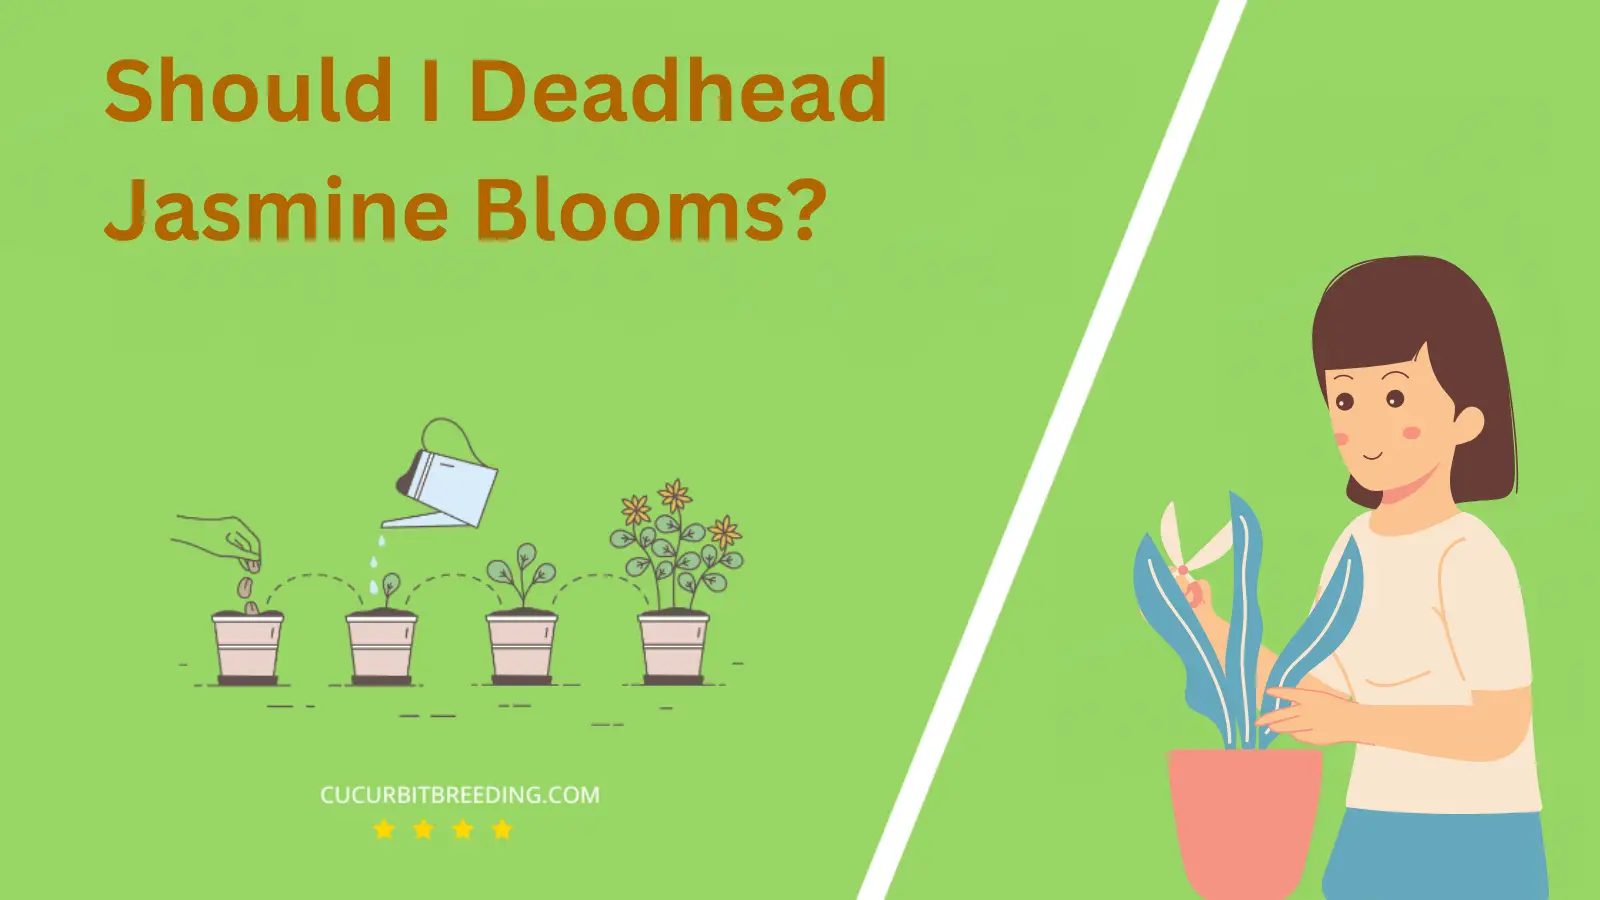 Should I Deadhead Jasmine Blooms?